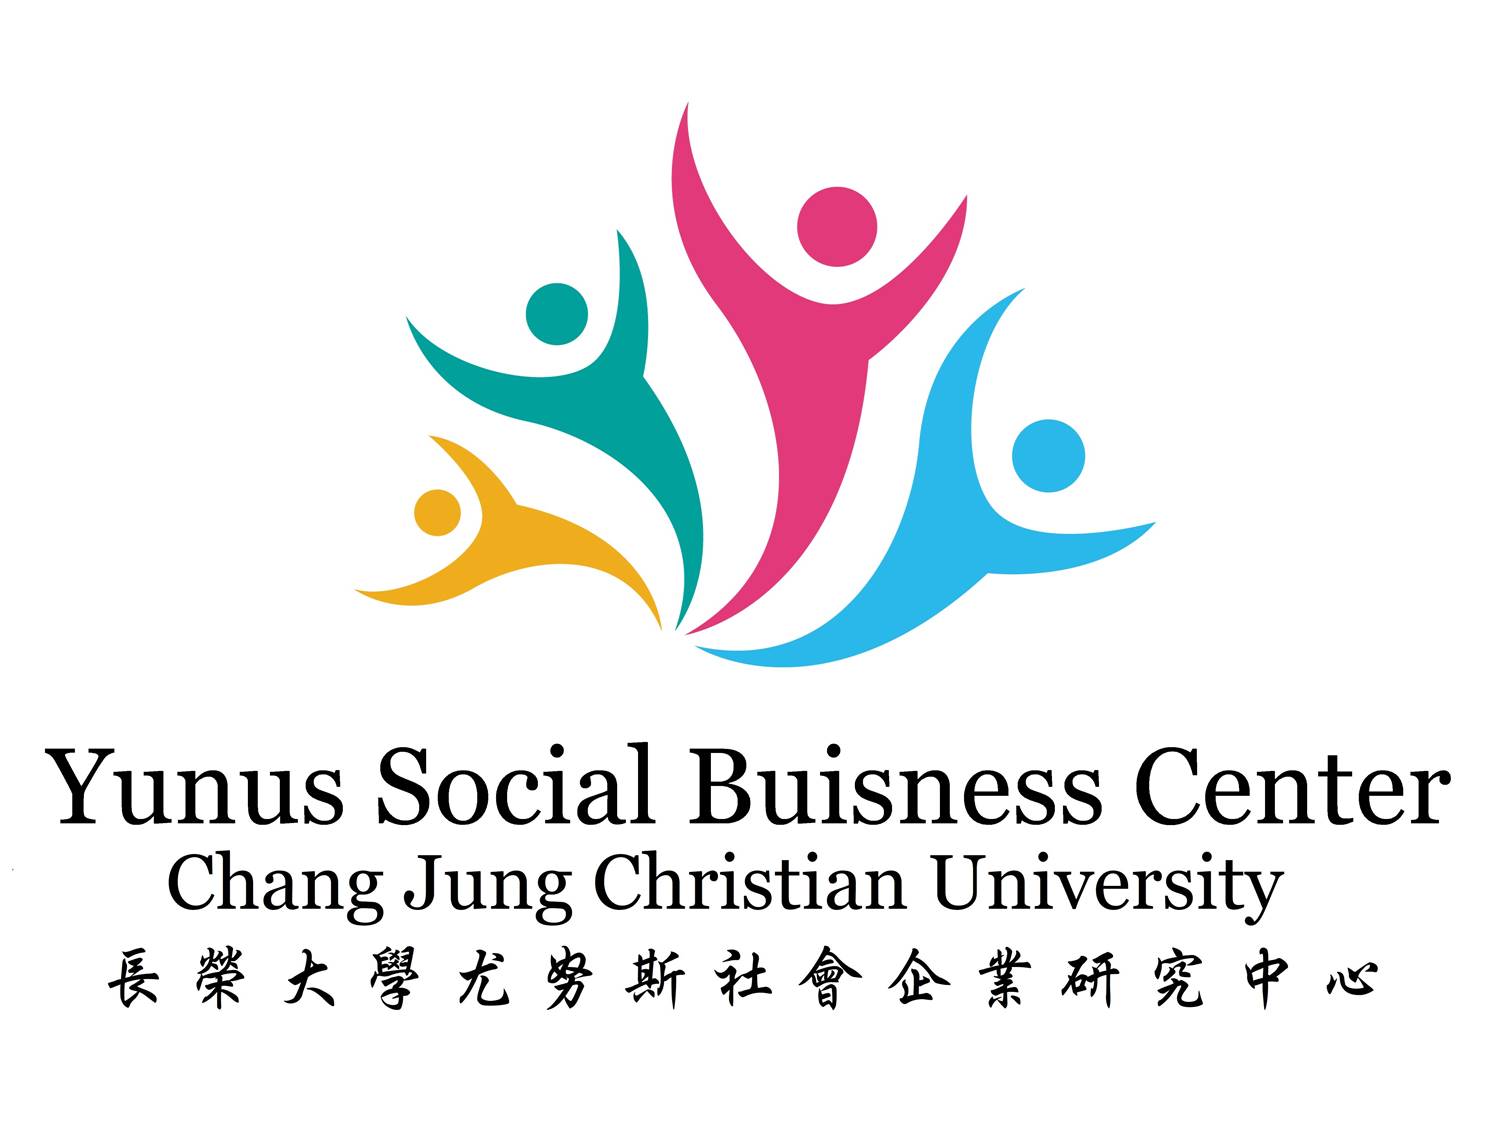 Yunus Social Business Center, Chang Jung Christian University